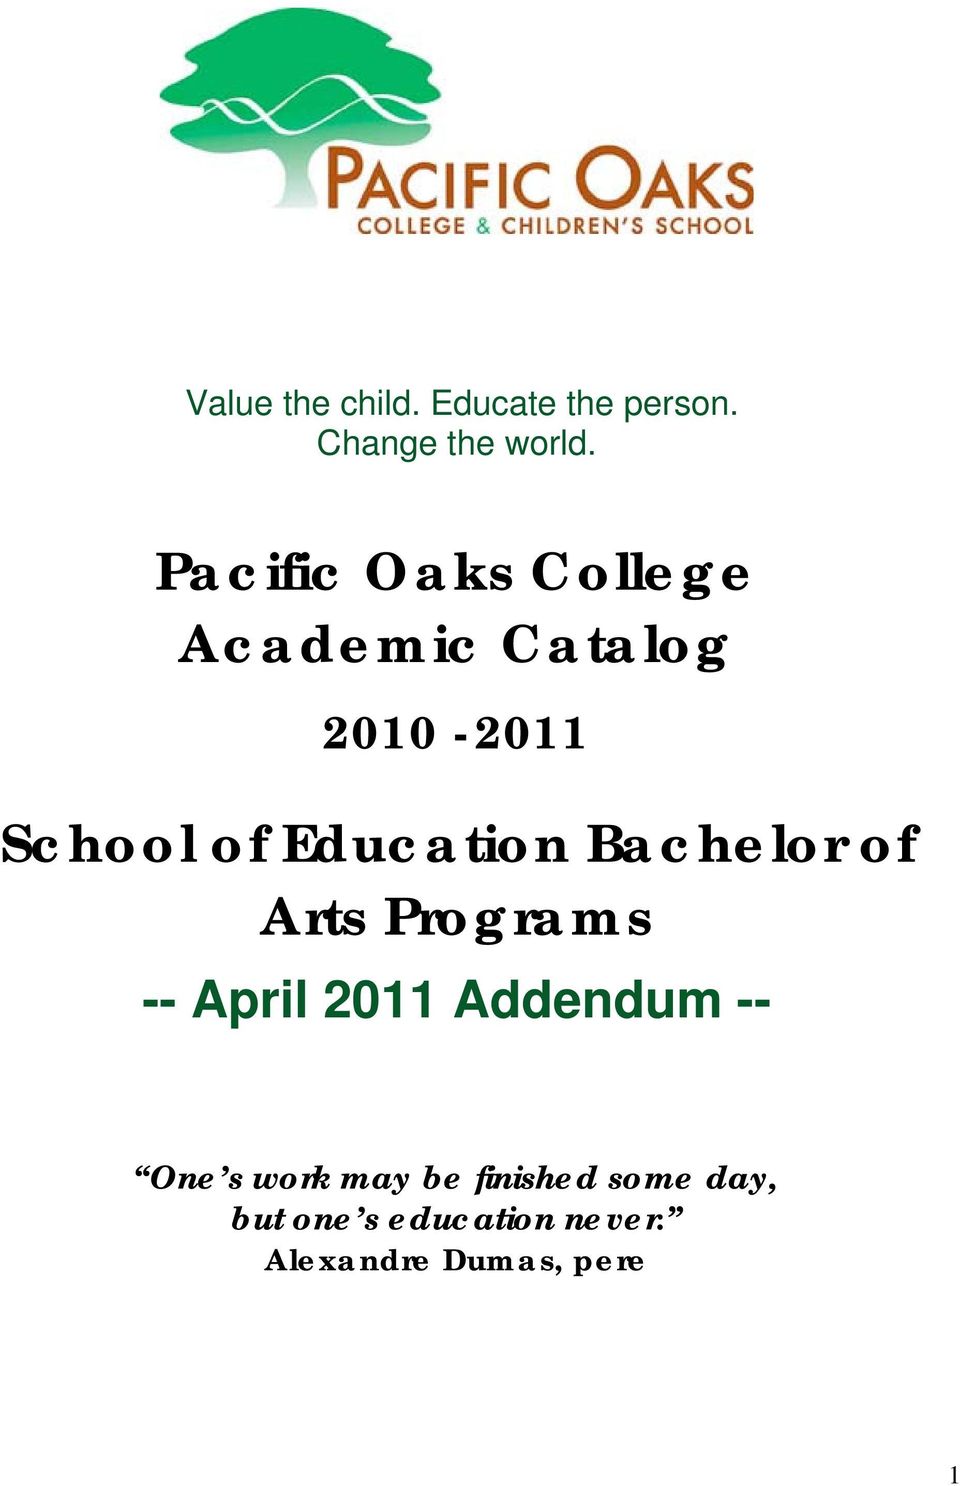 Education Bachelor of Arts Programs -- April 2011 Addendum -- One